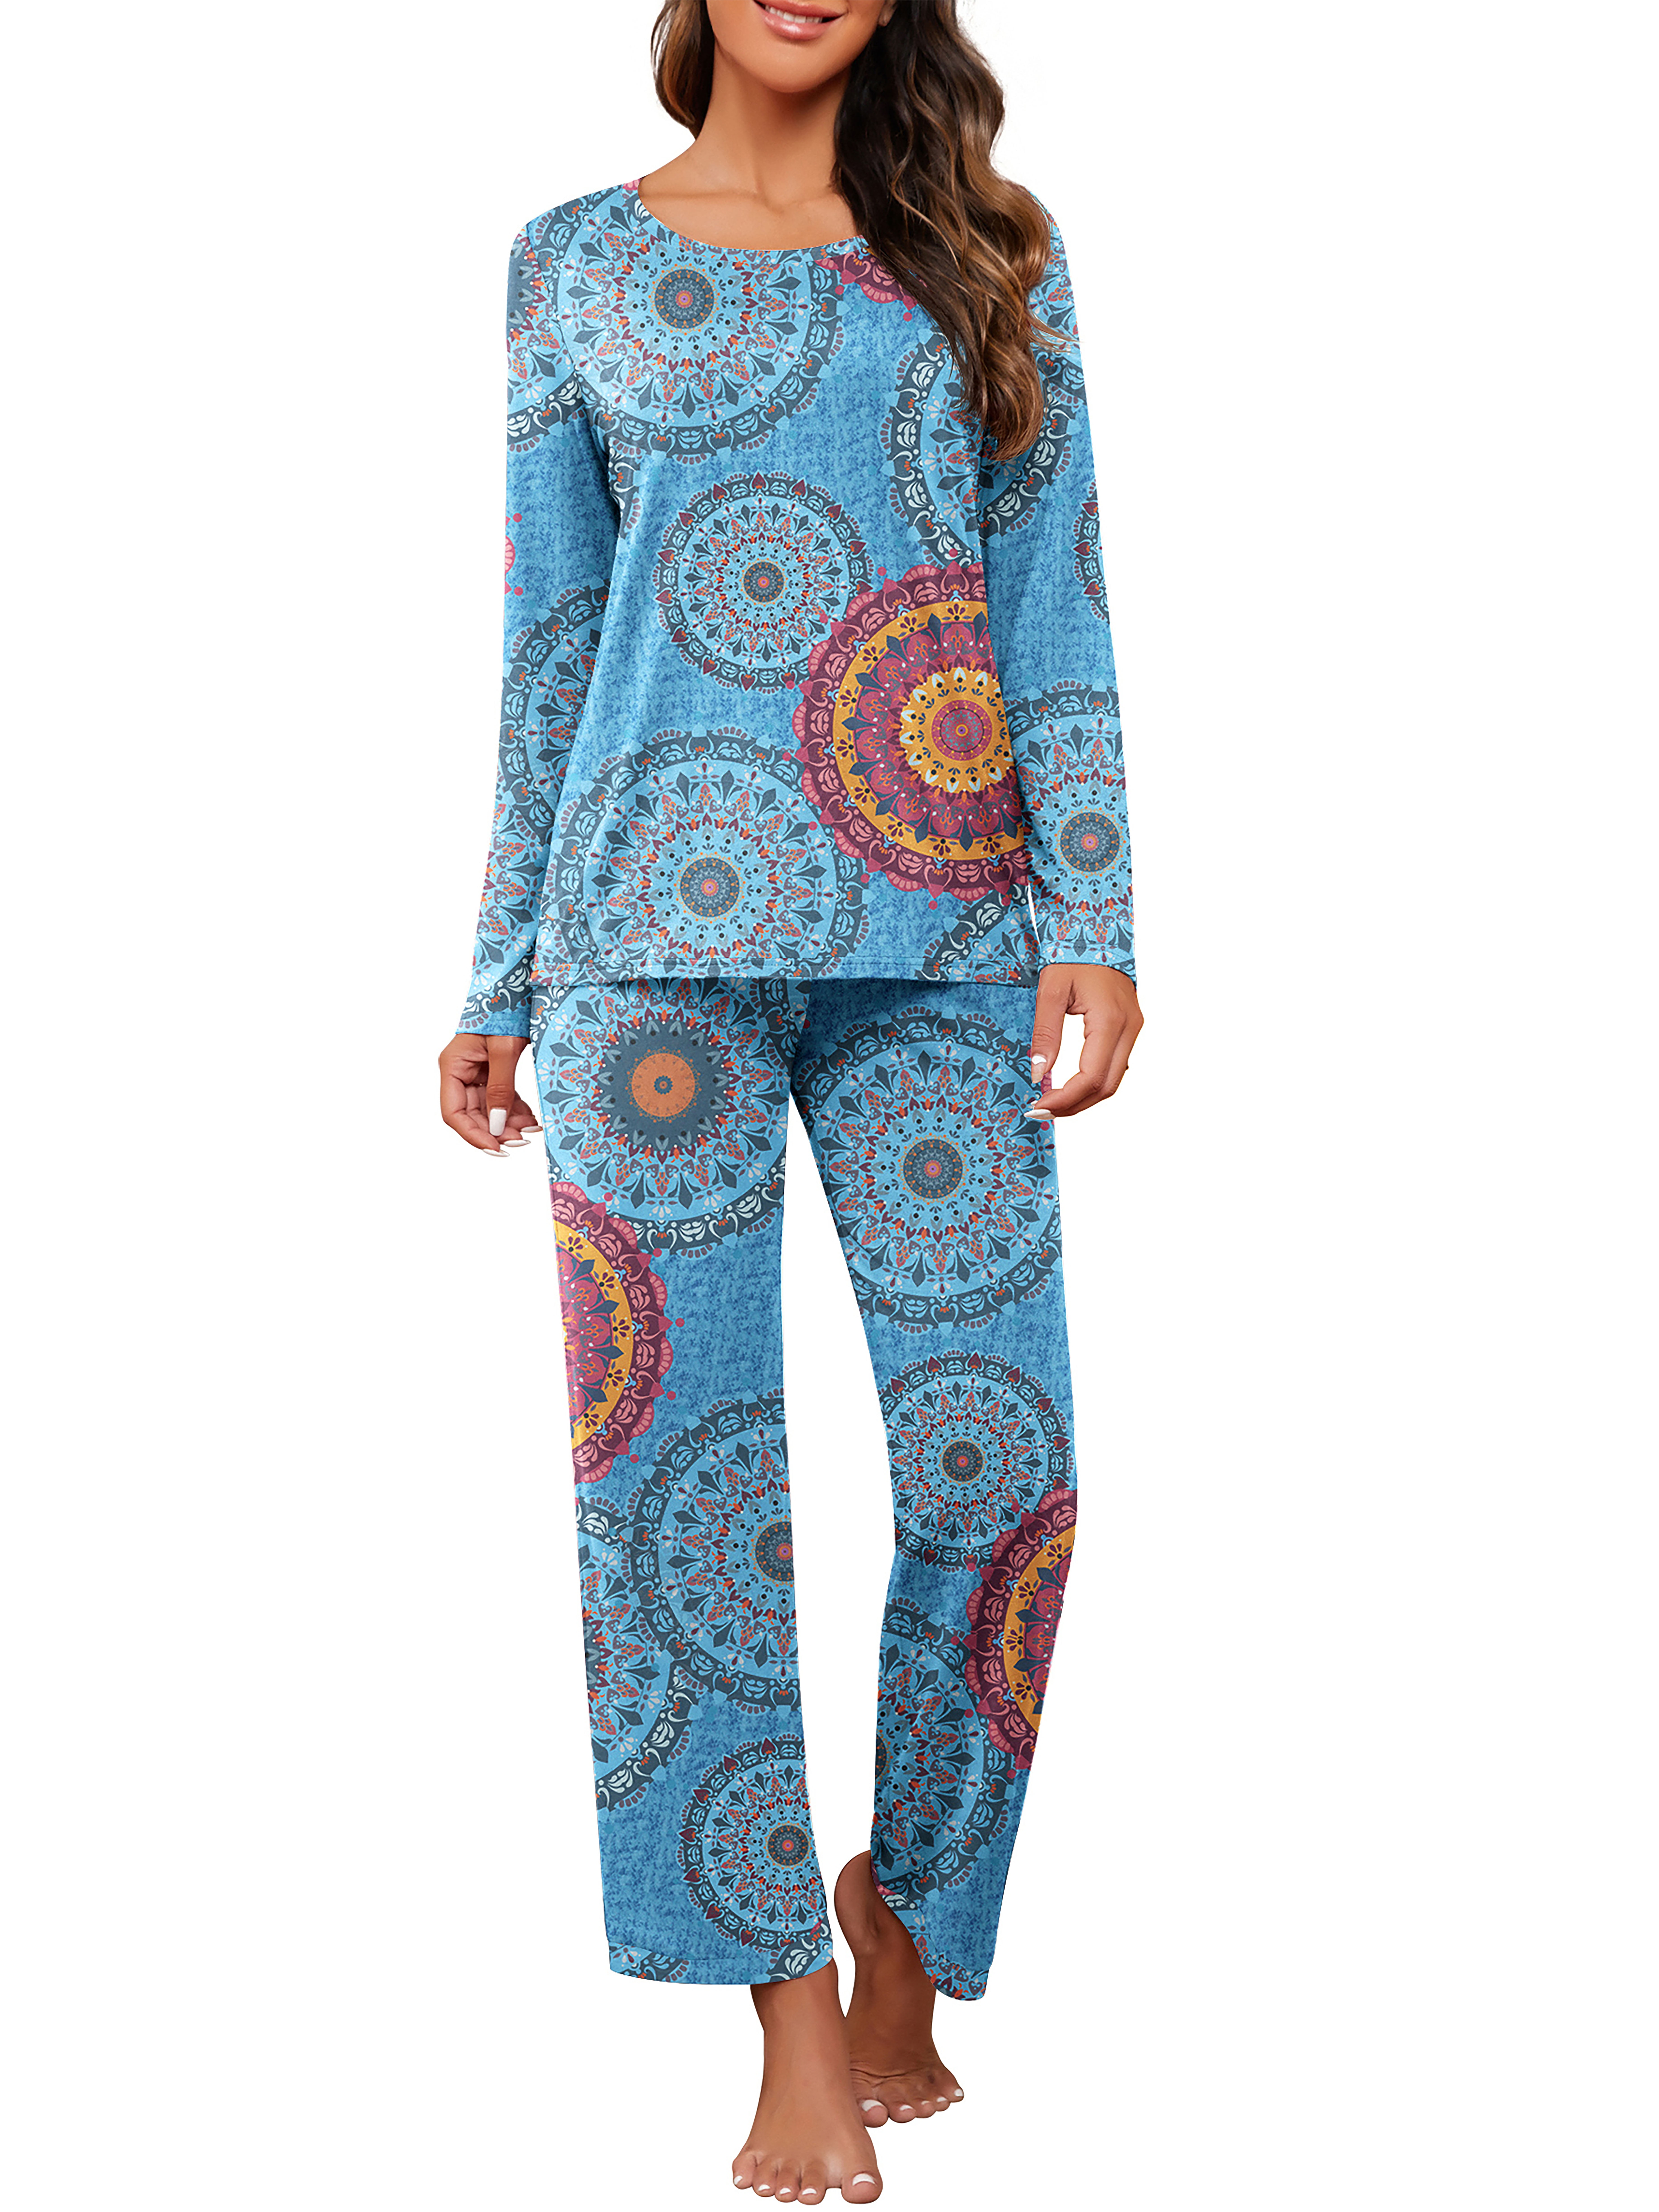 MINTREUS Women's Pajama Set Long Sleeve Sleepwear Ladies Soft Pjs